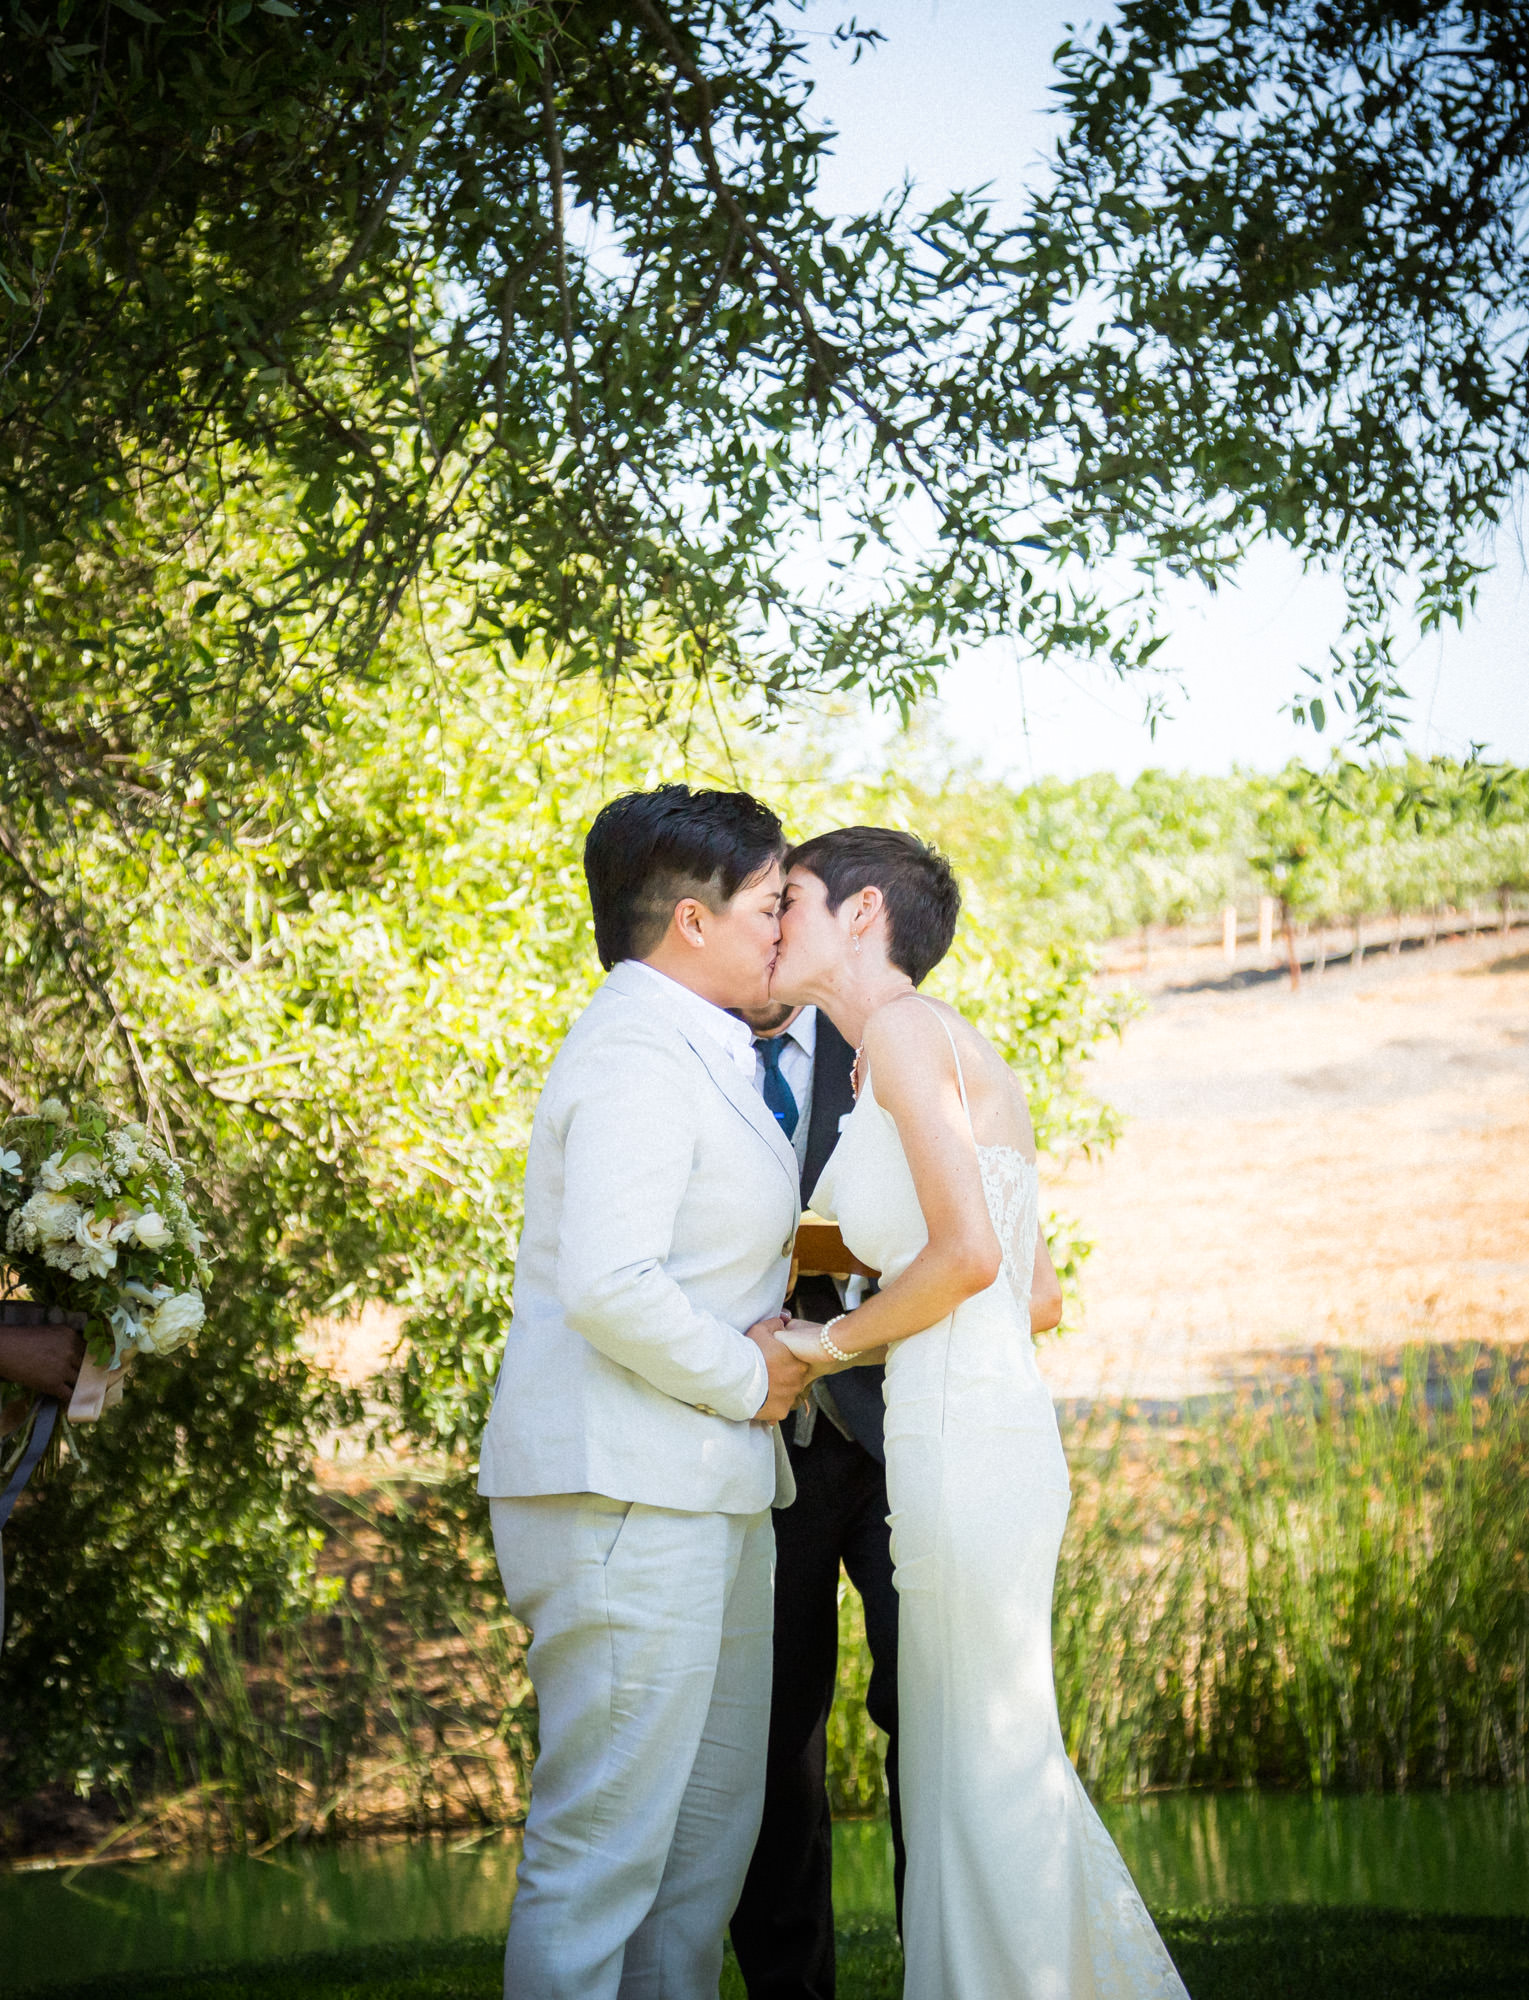 Greengate Ranch Wedding - Reese & Lauren - Clair Images - San Luis Obispo Wedding Photographers